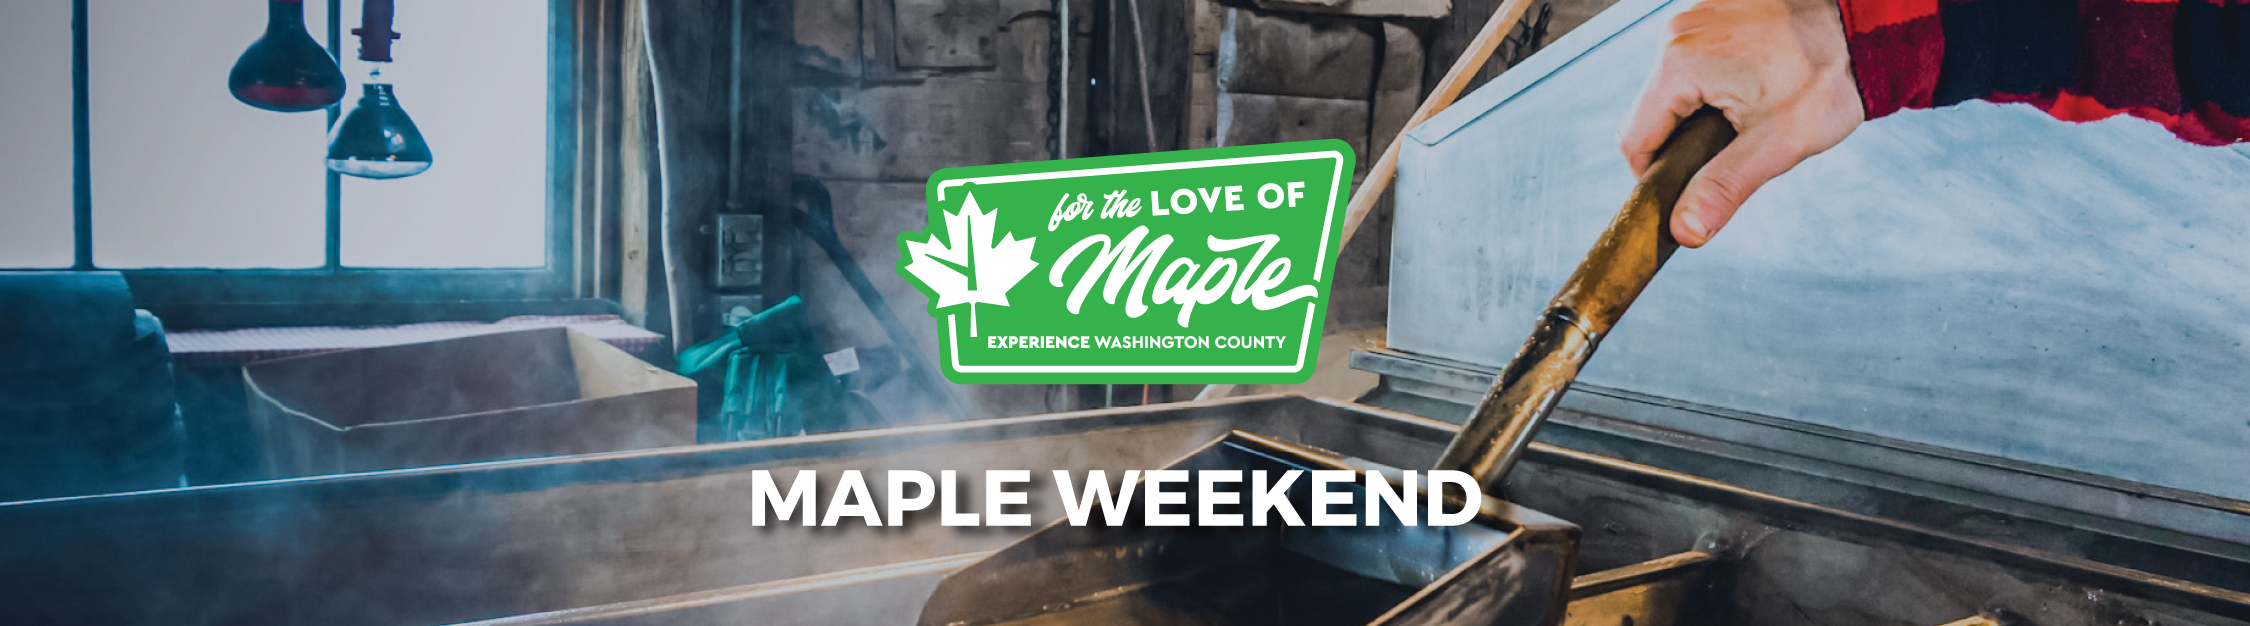 Maple Weekend Washington County Ny 8527